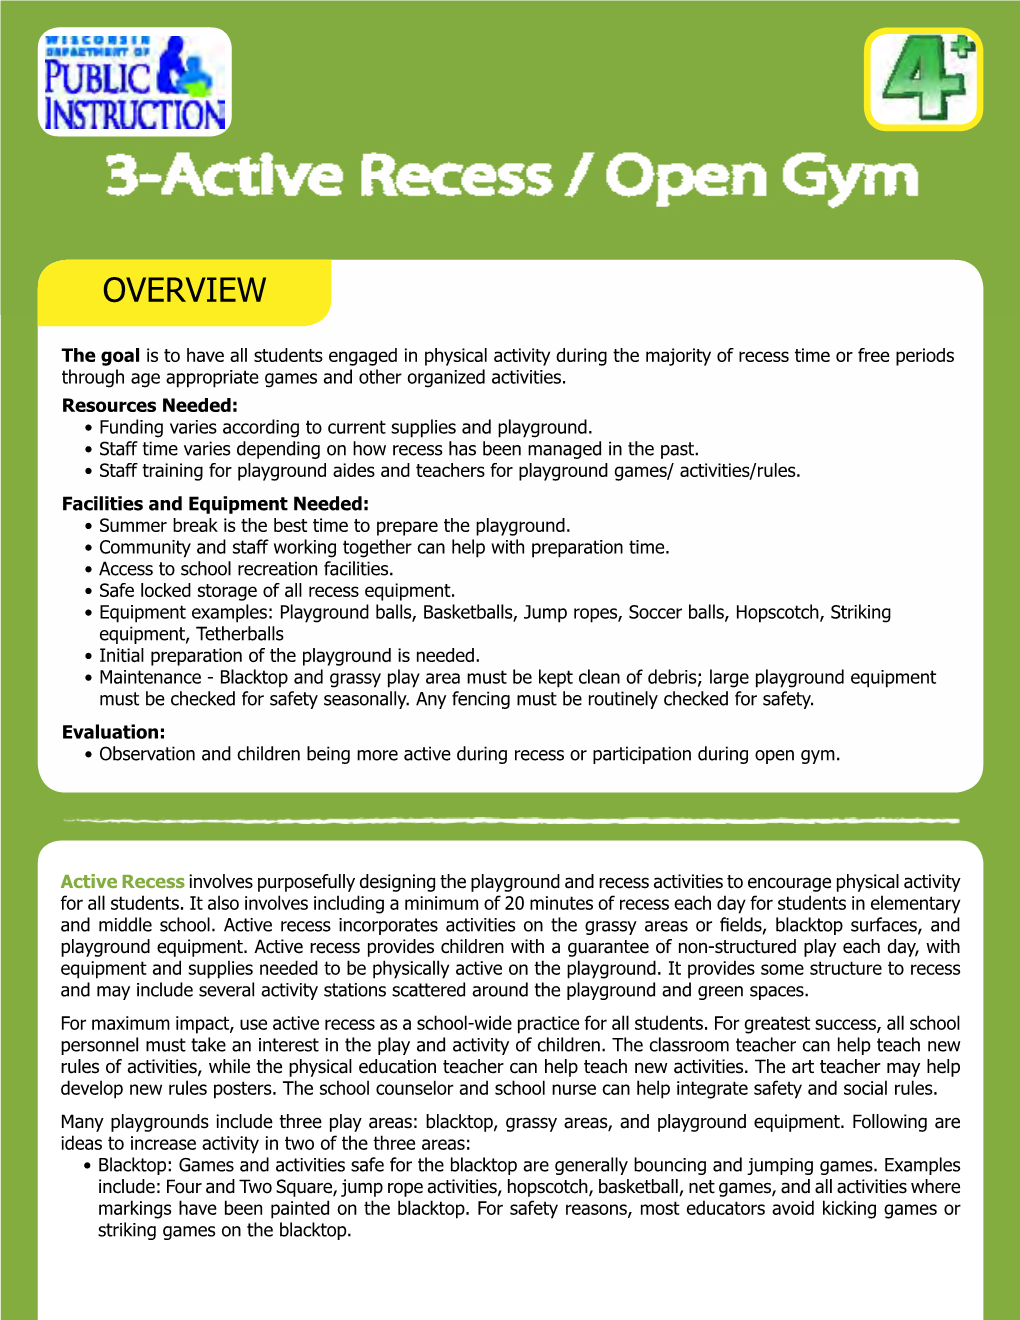 Active Recess/Open